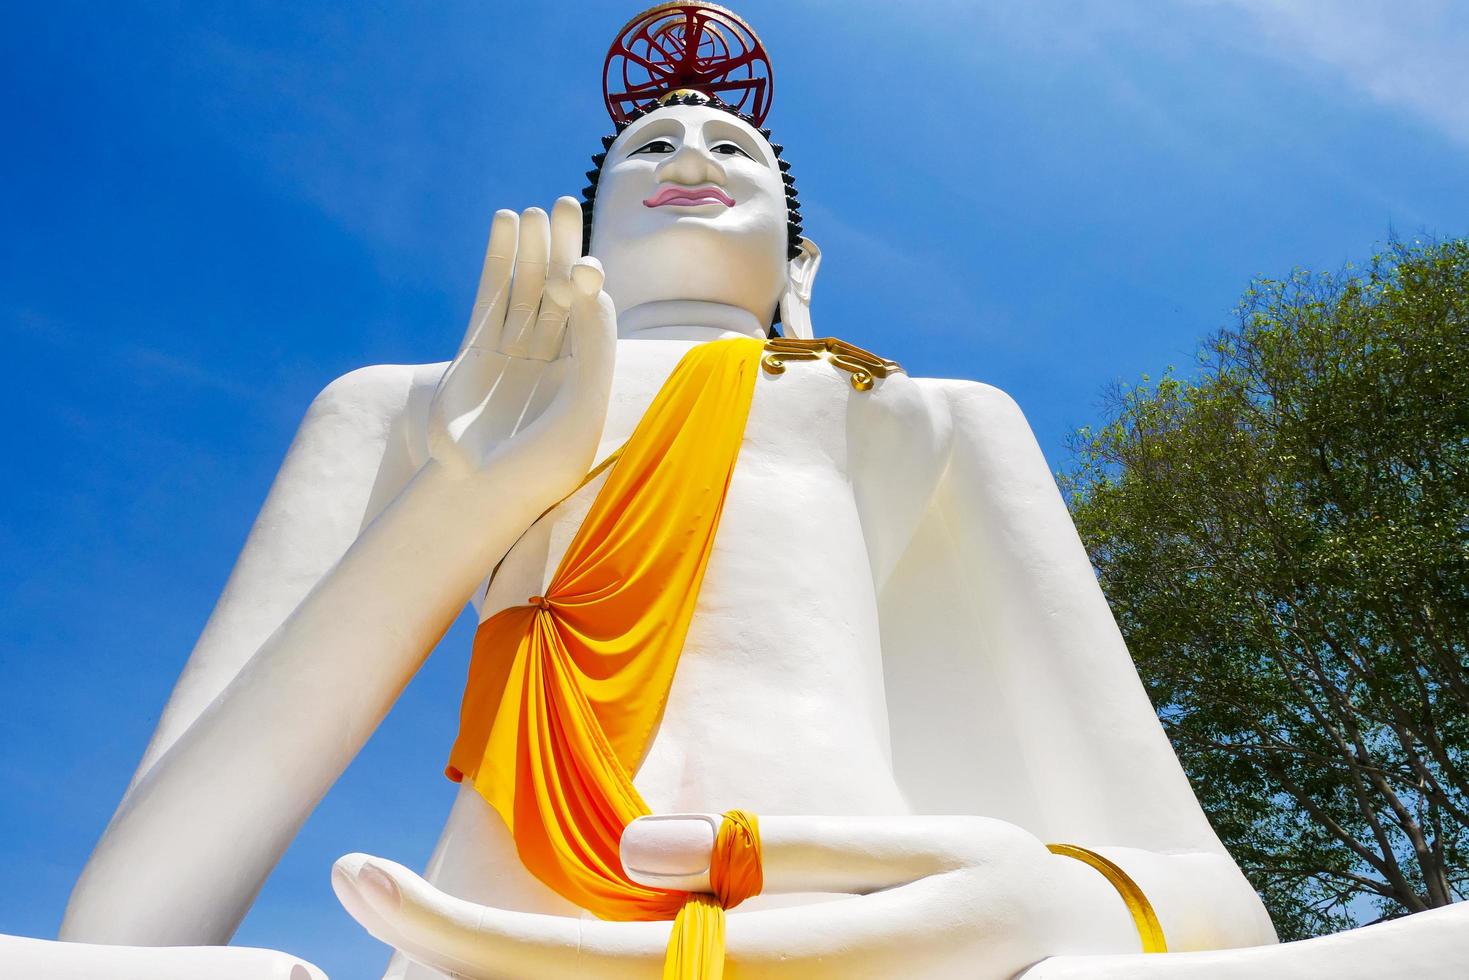 Large white Buddha statue on a blue sky background photo